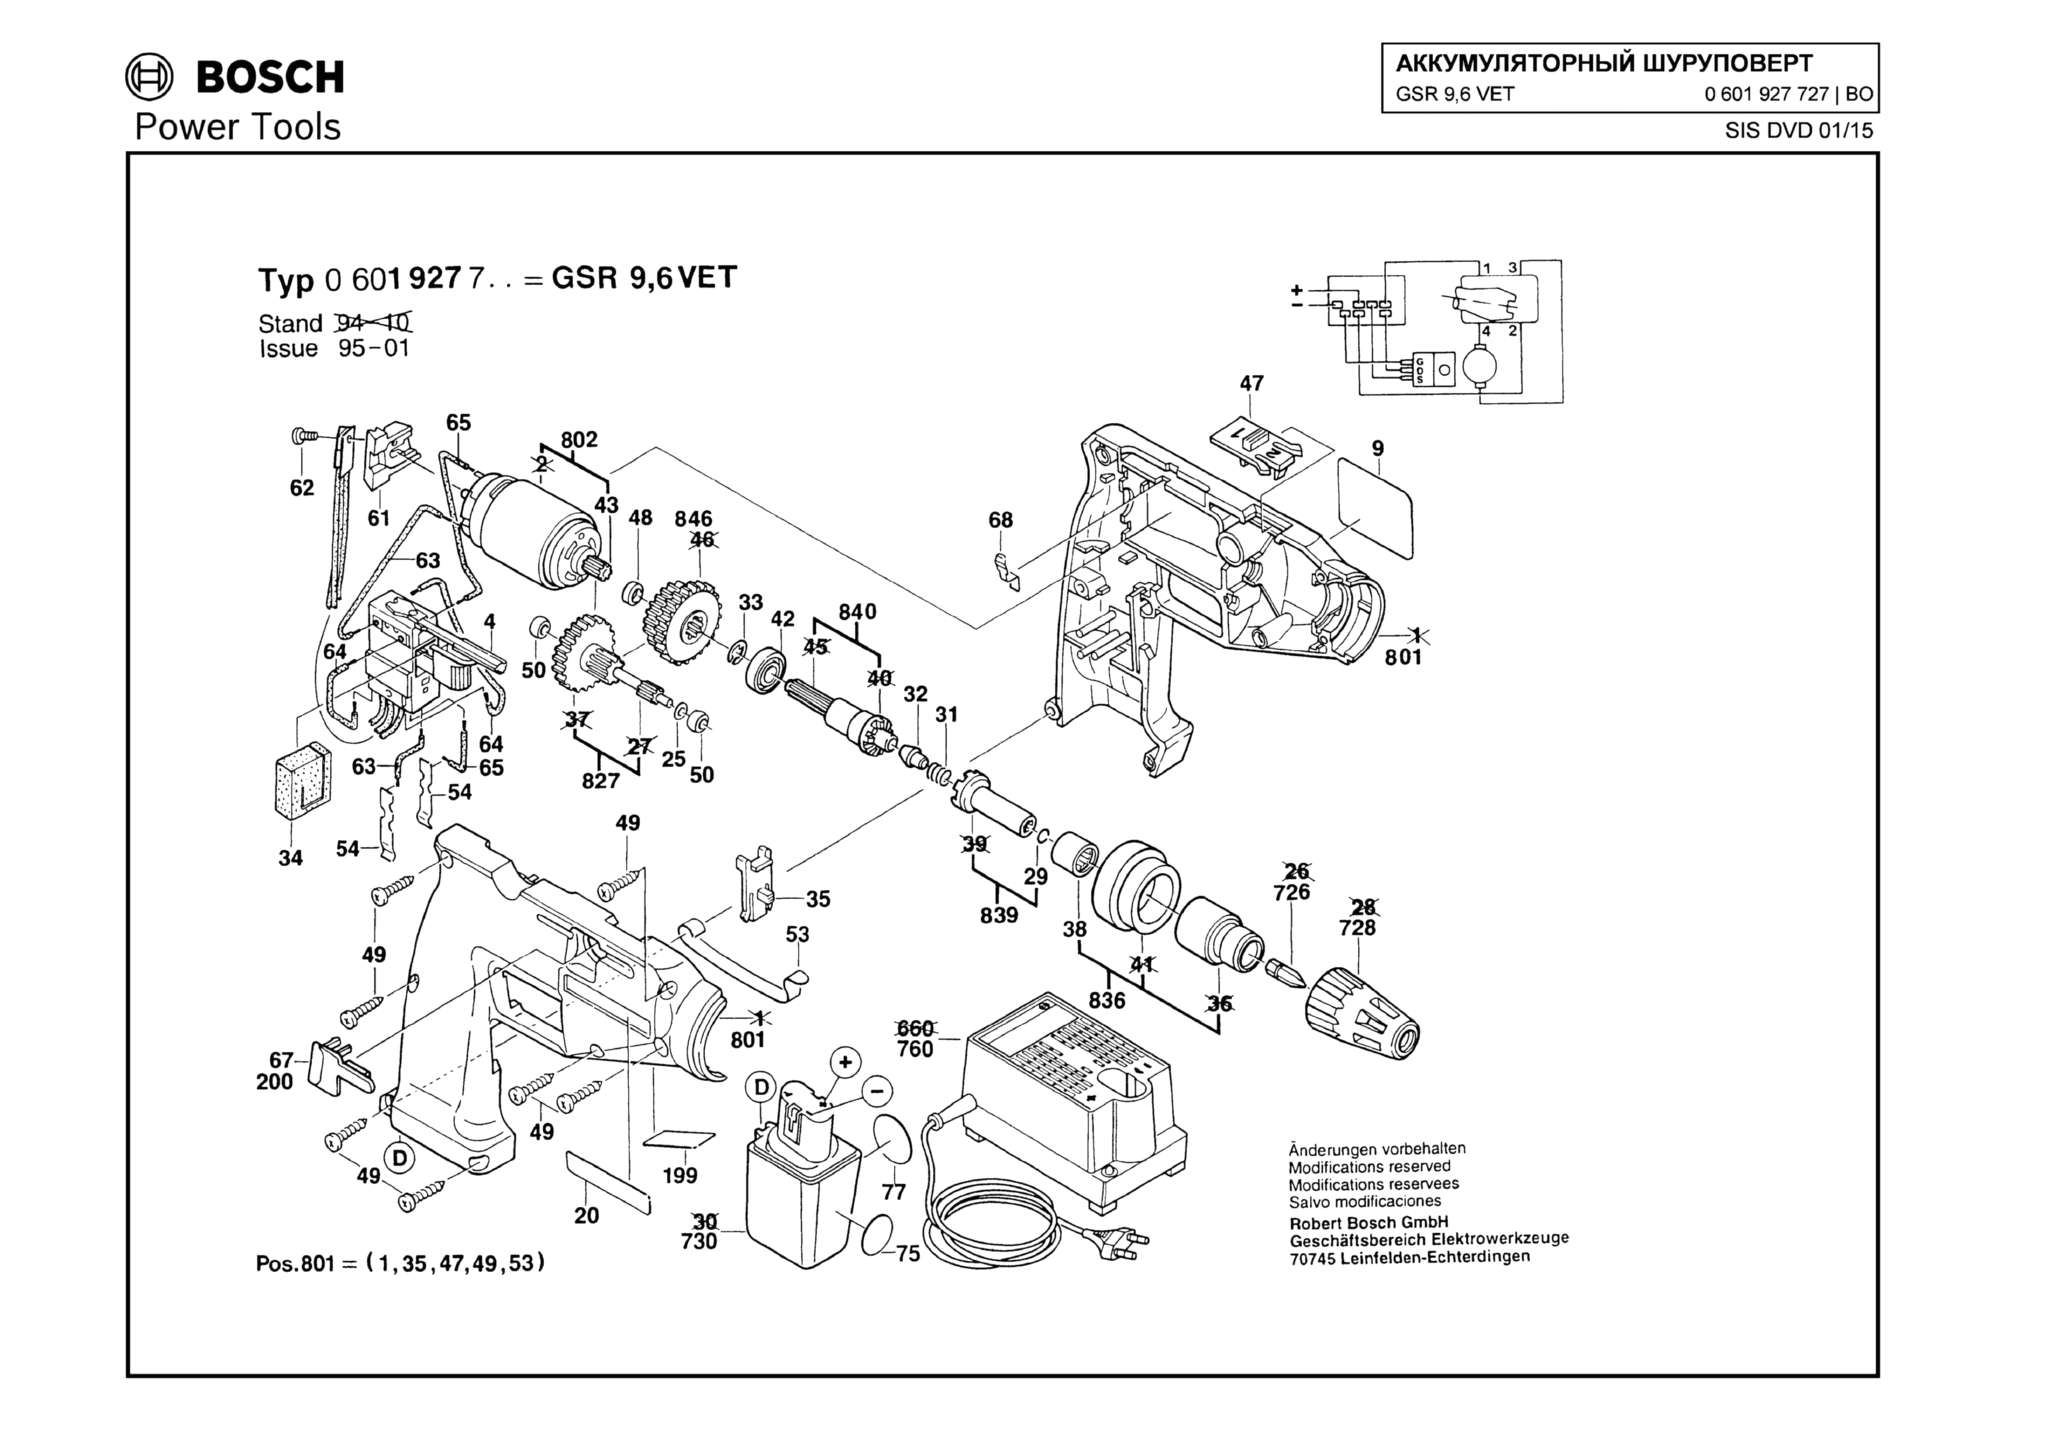 Запчасти, схема и деталировка Bosch GSR 9,6 VET (ТИП 0601927727)